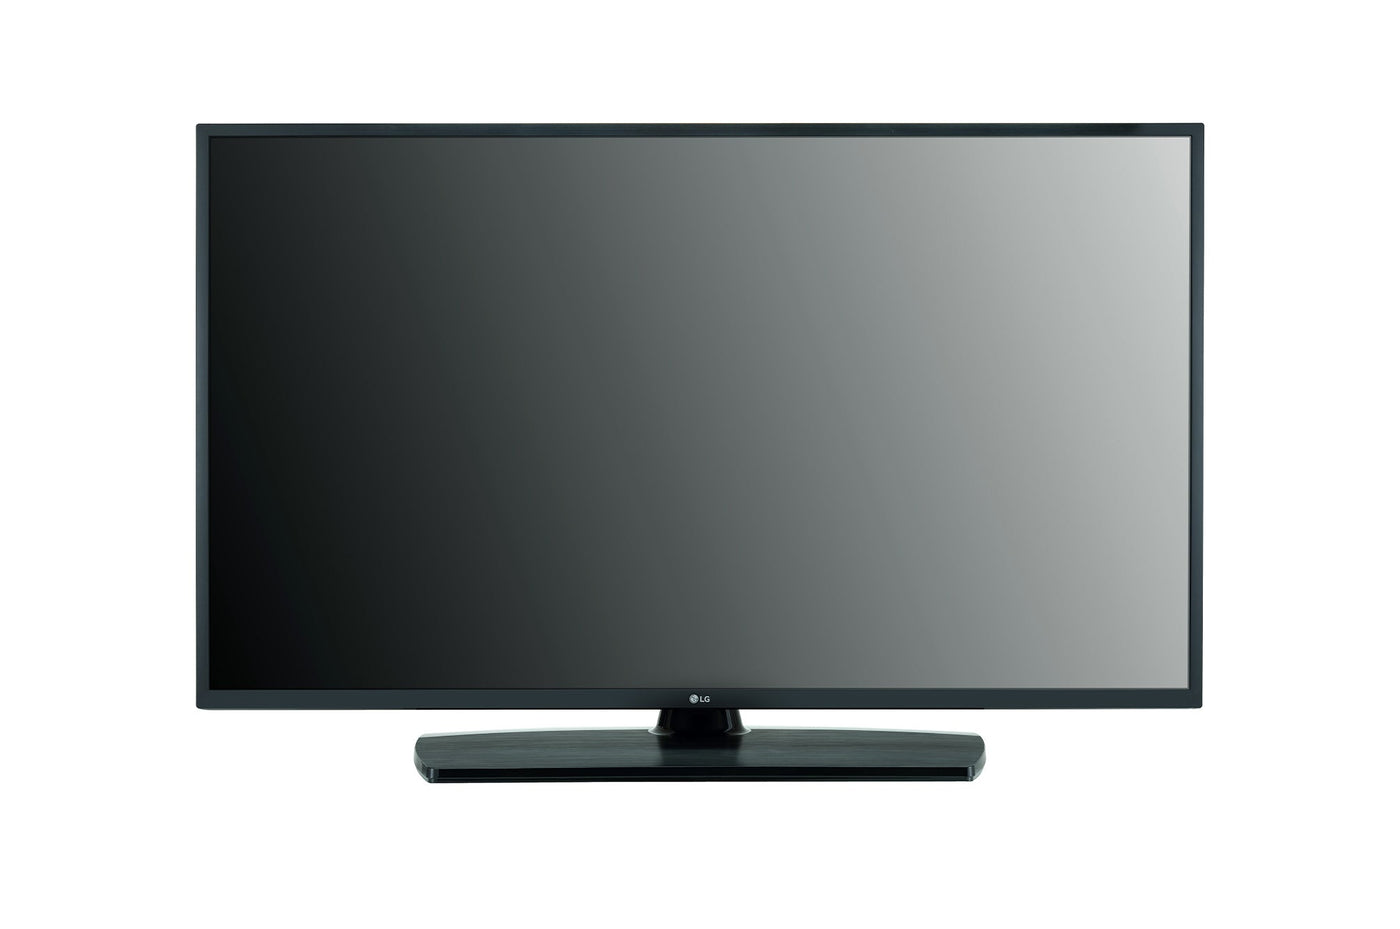 LG 43UM670H9 43" Pro:Centric Smart Hospitality 4K UHD TV with Slim Depth and Pro:Idiom Direct